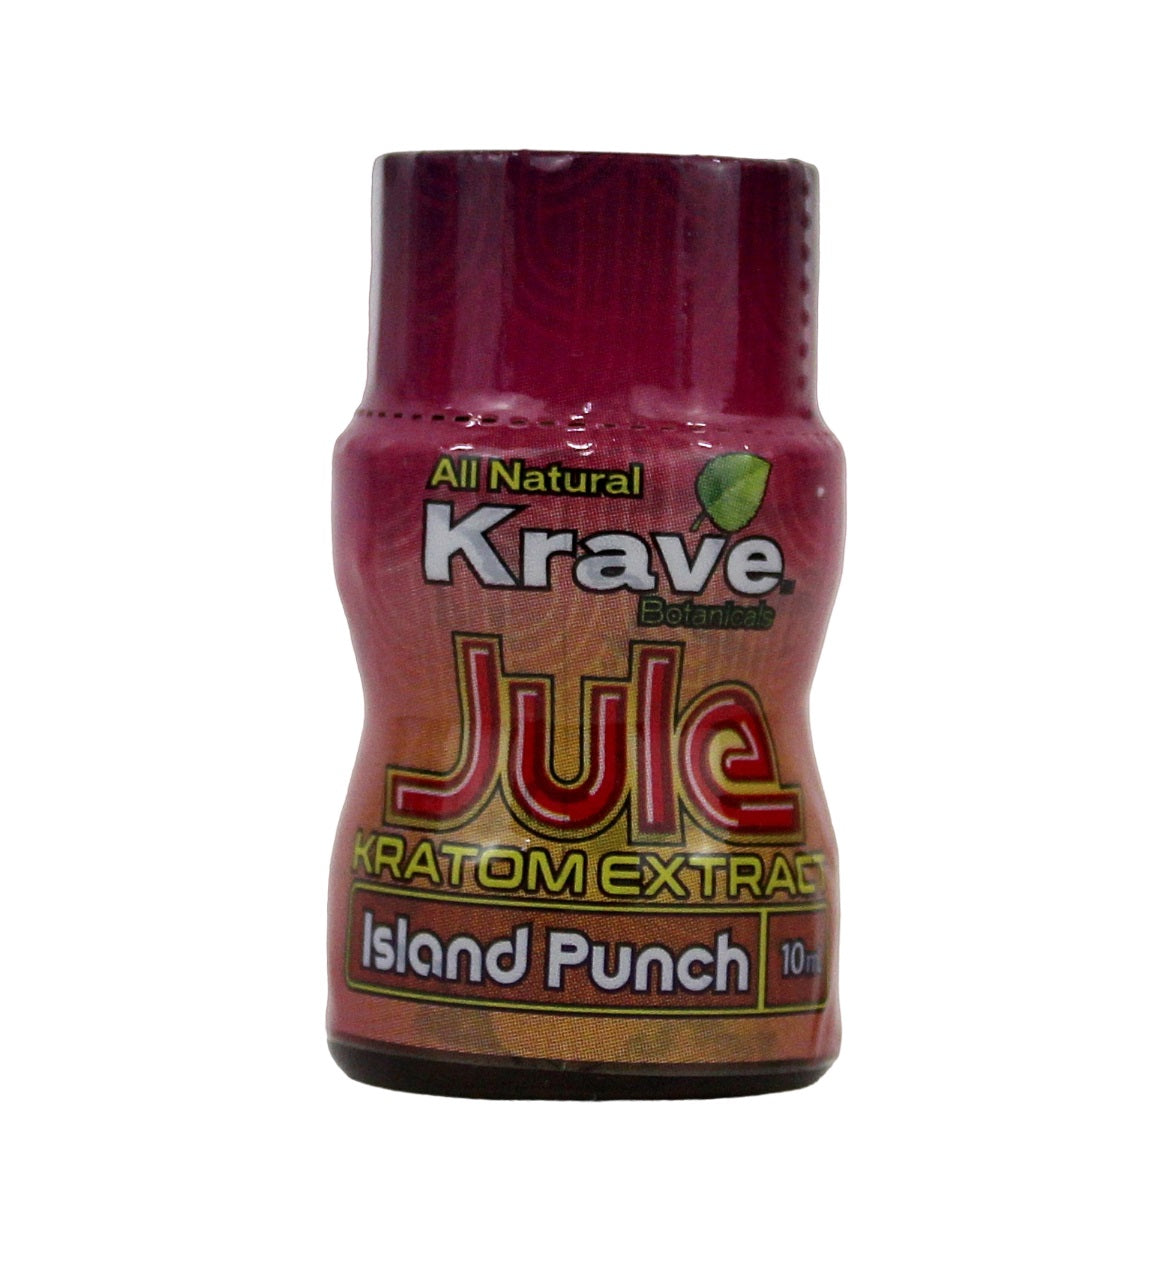 24ct Krave Jule Kratom Extract Shot - Island Punch